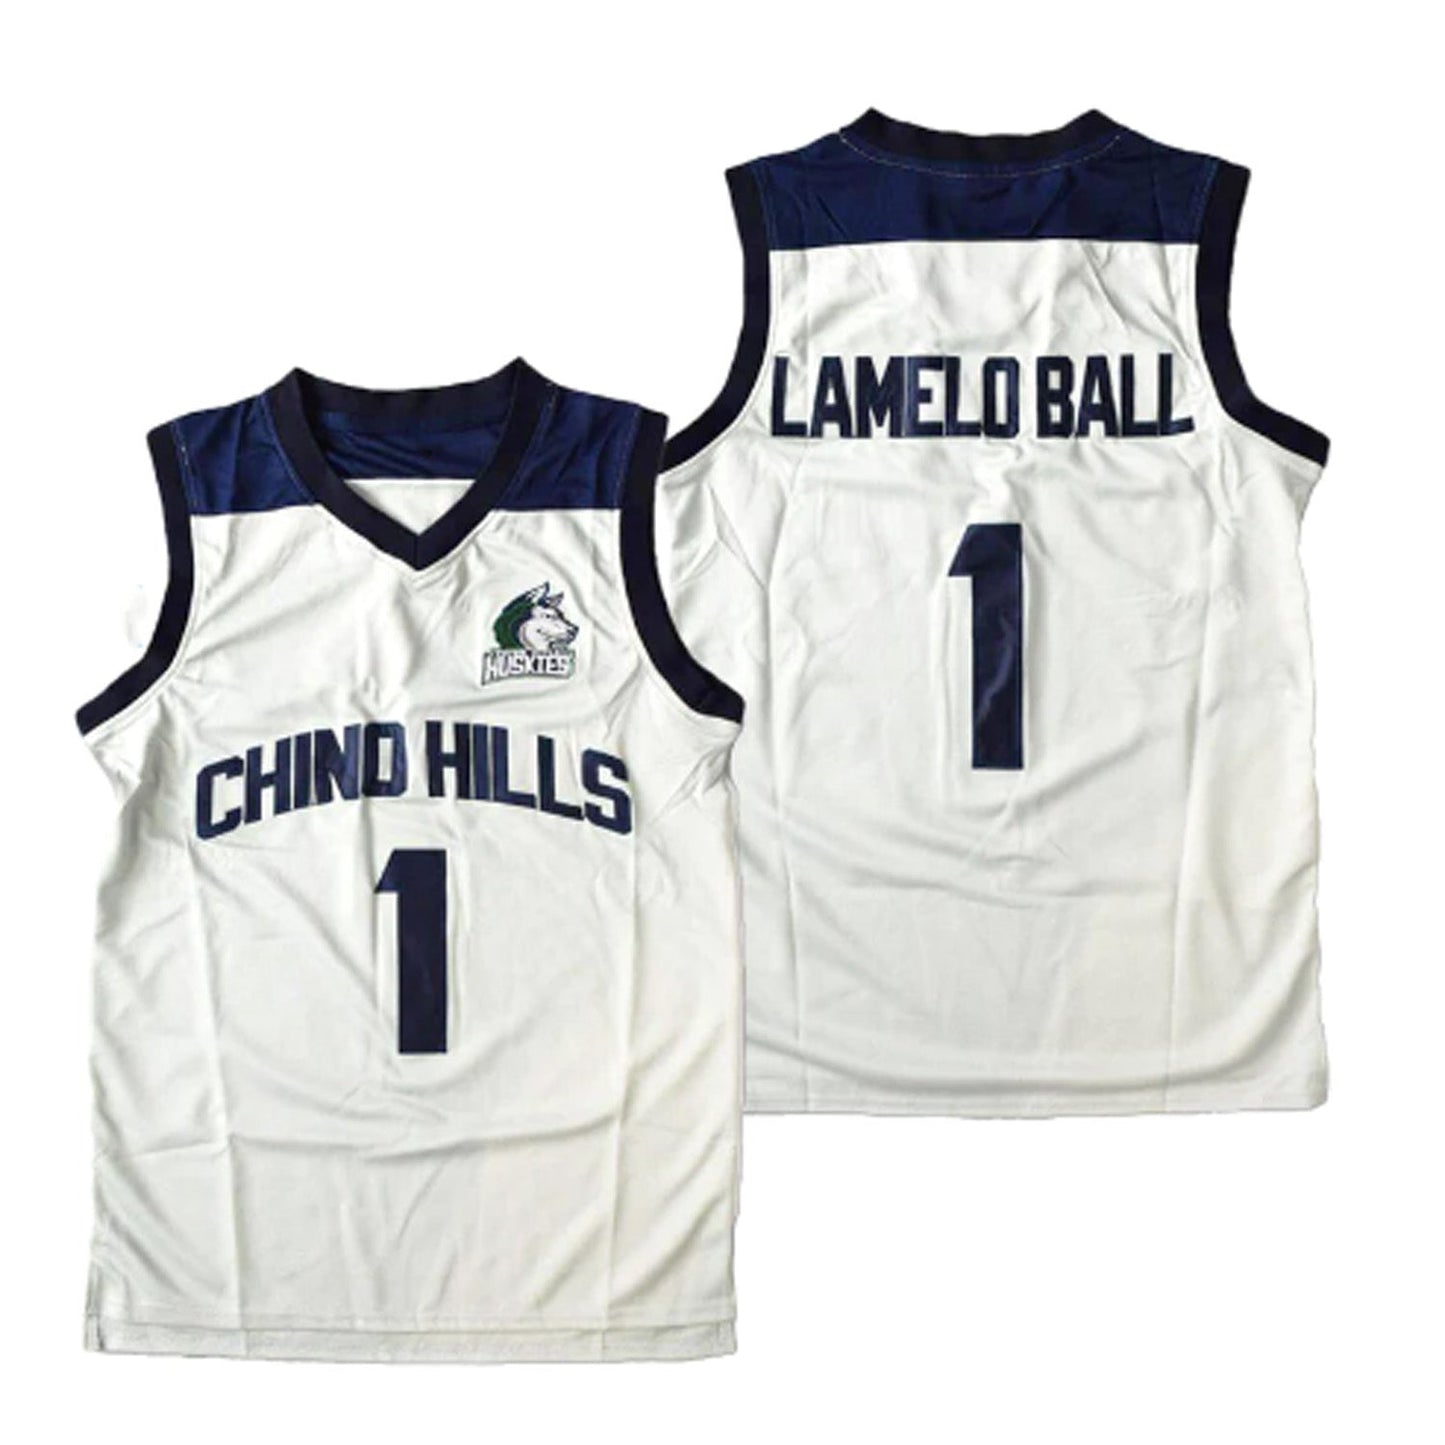 LaMelo Ball Chino Hills High School 1 Jersey